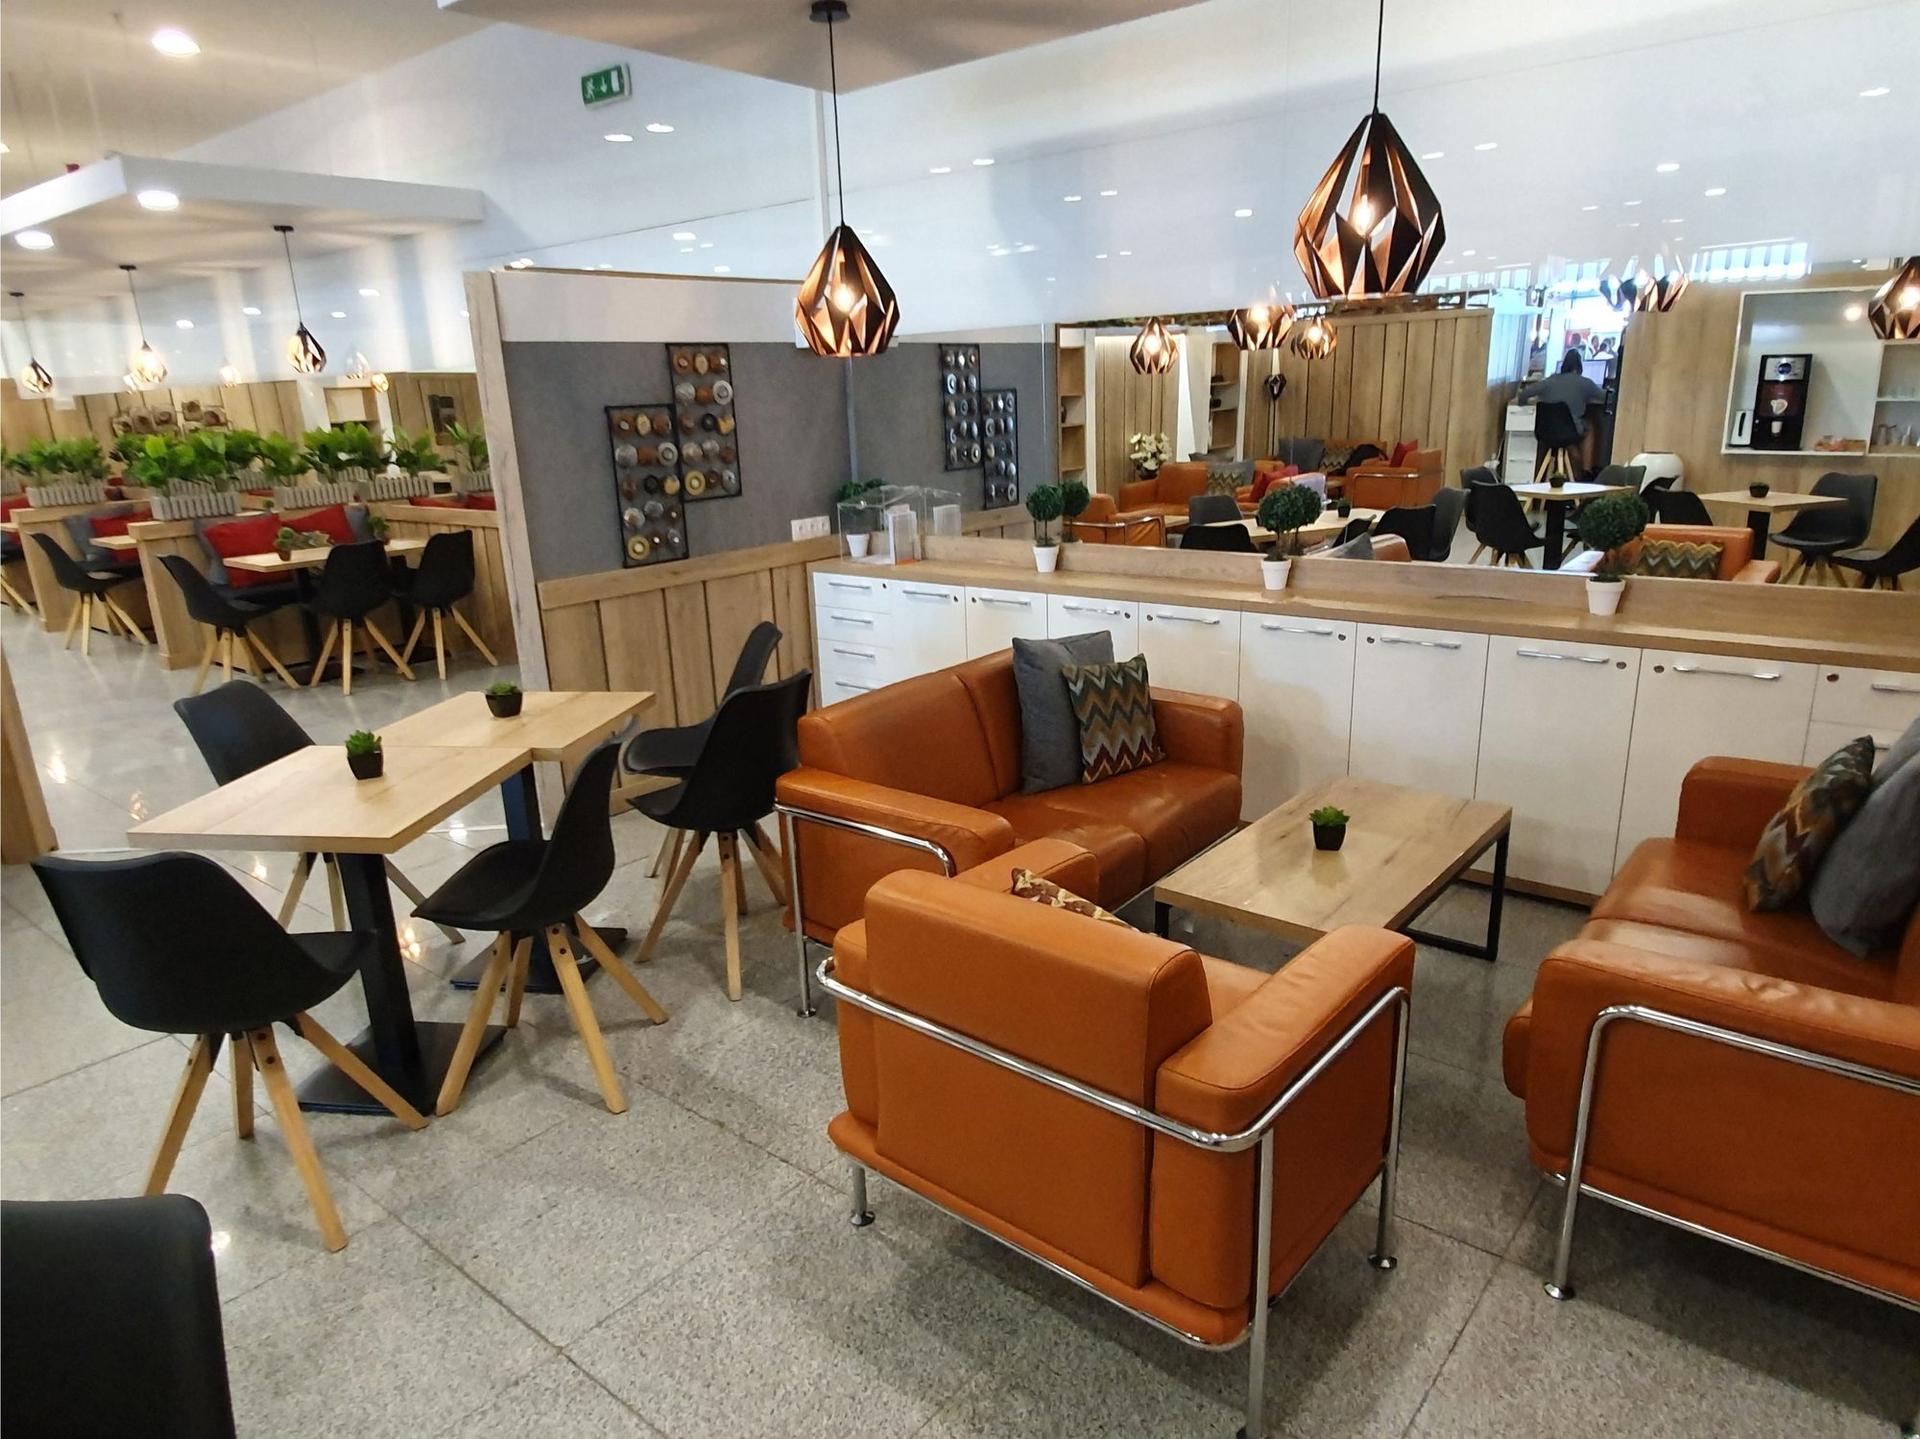 Burgas Airport Lounge image 34 of 43